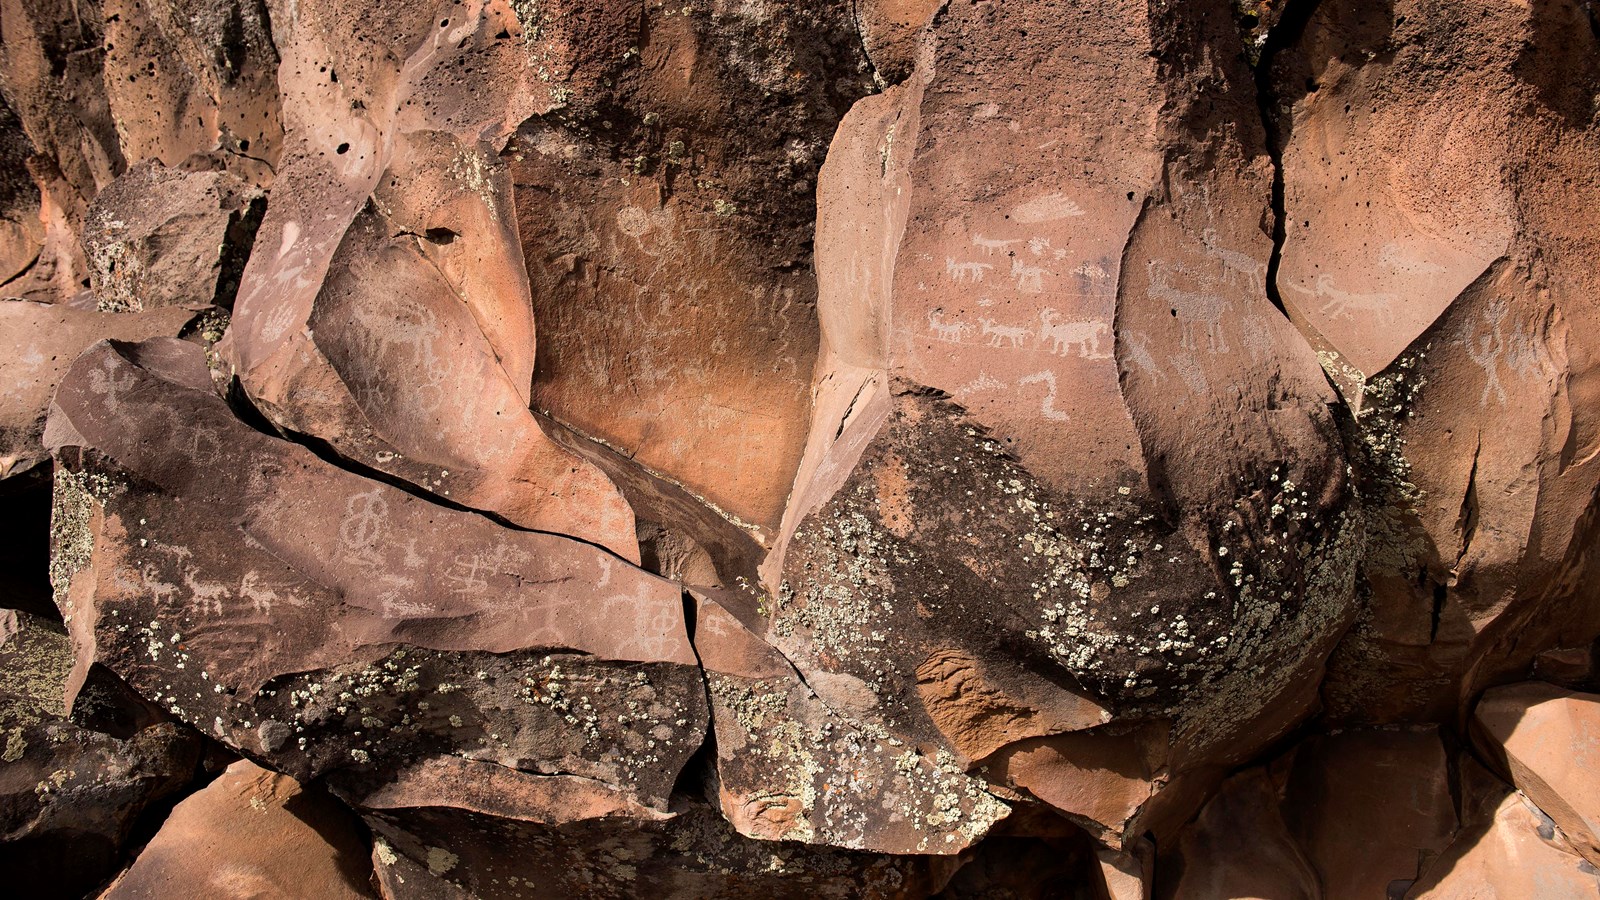 Dozens of petroglyphs carved into dark basalt rock.